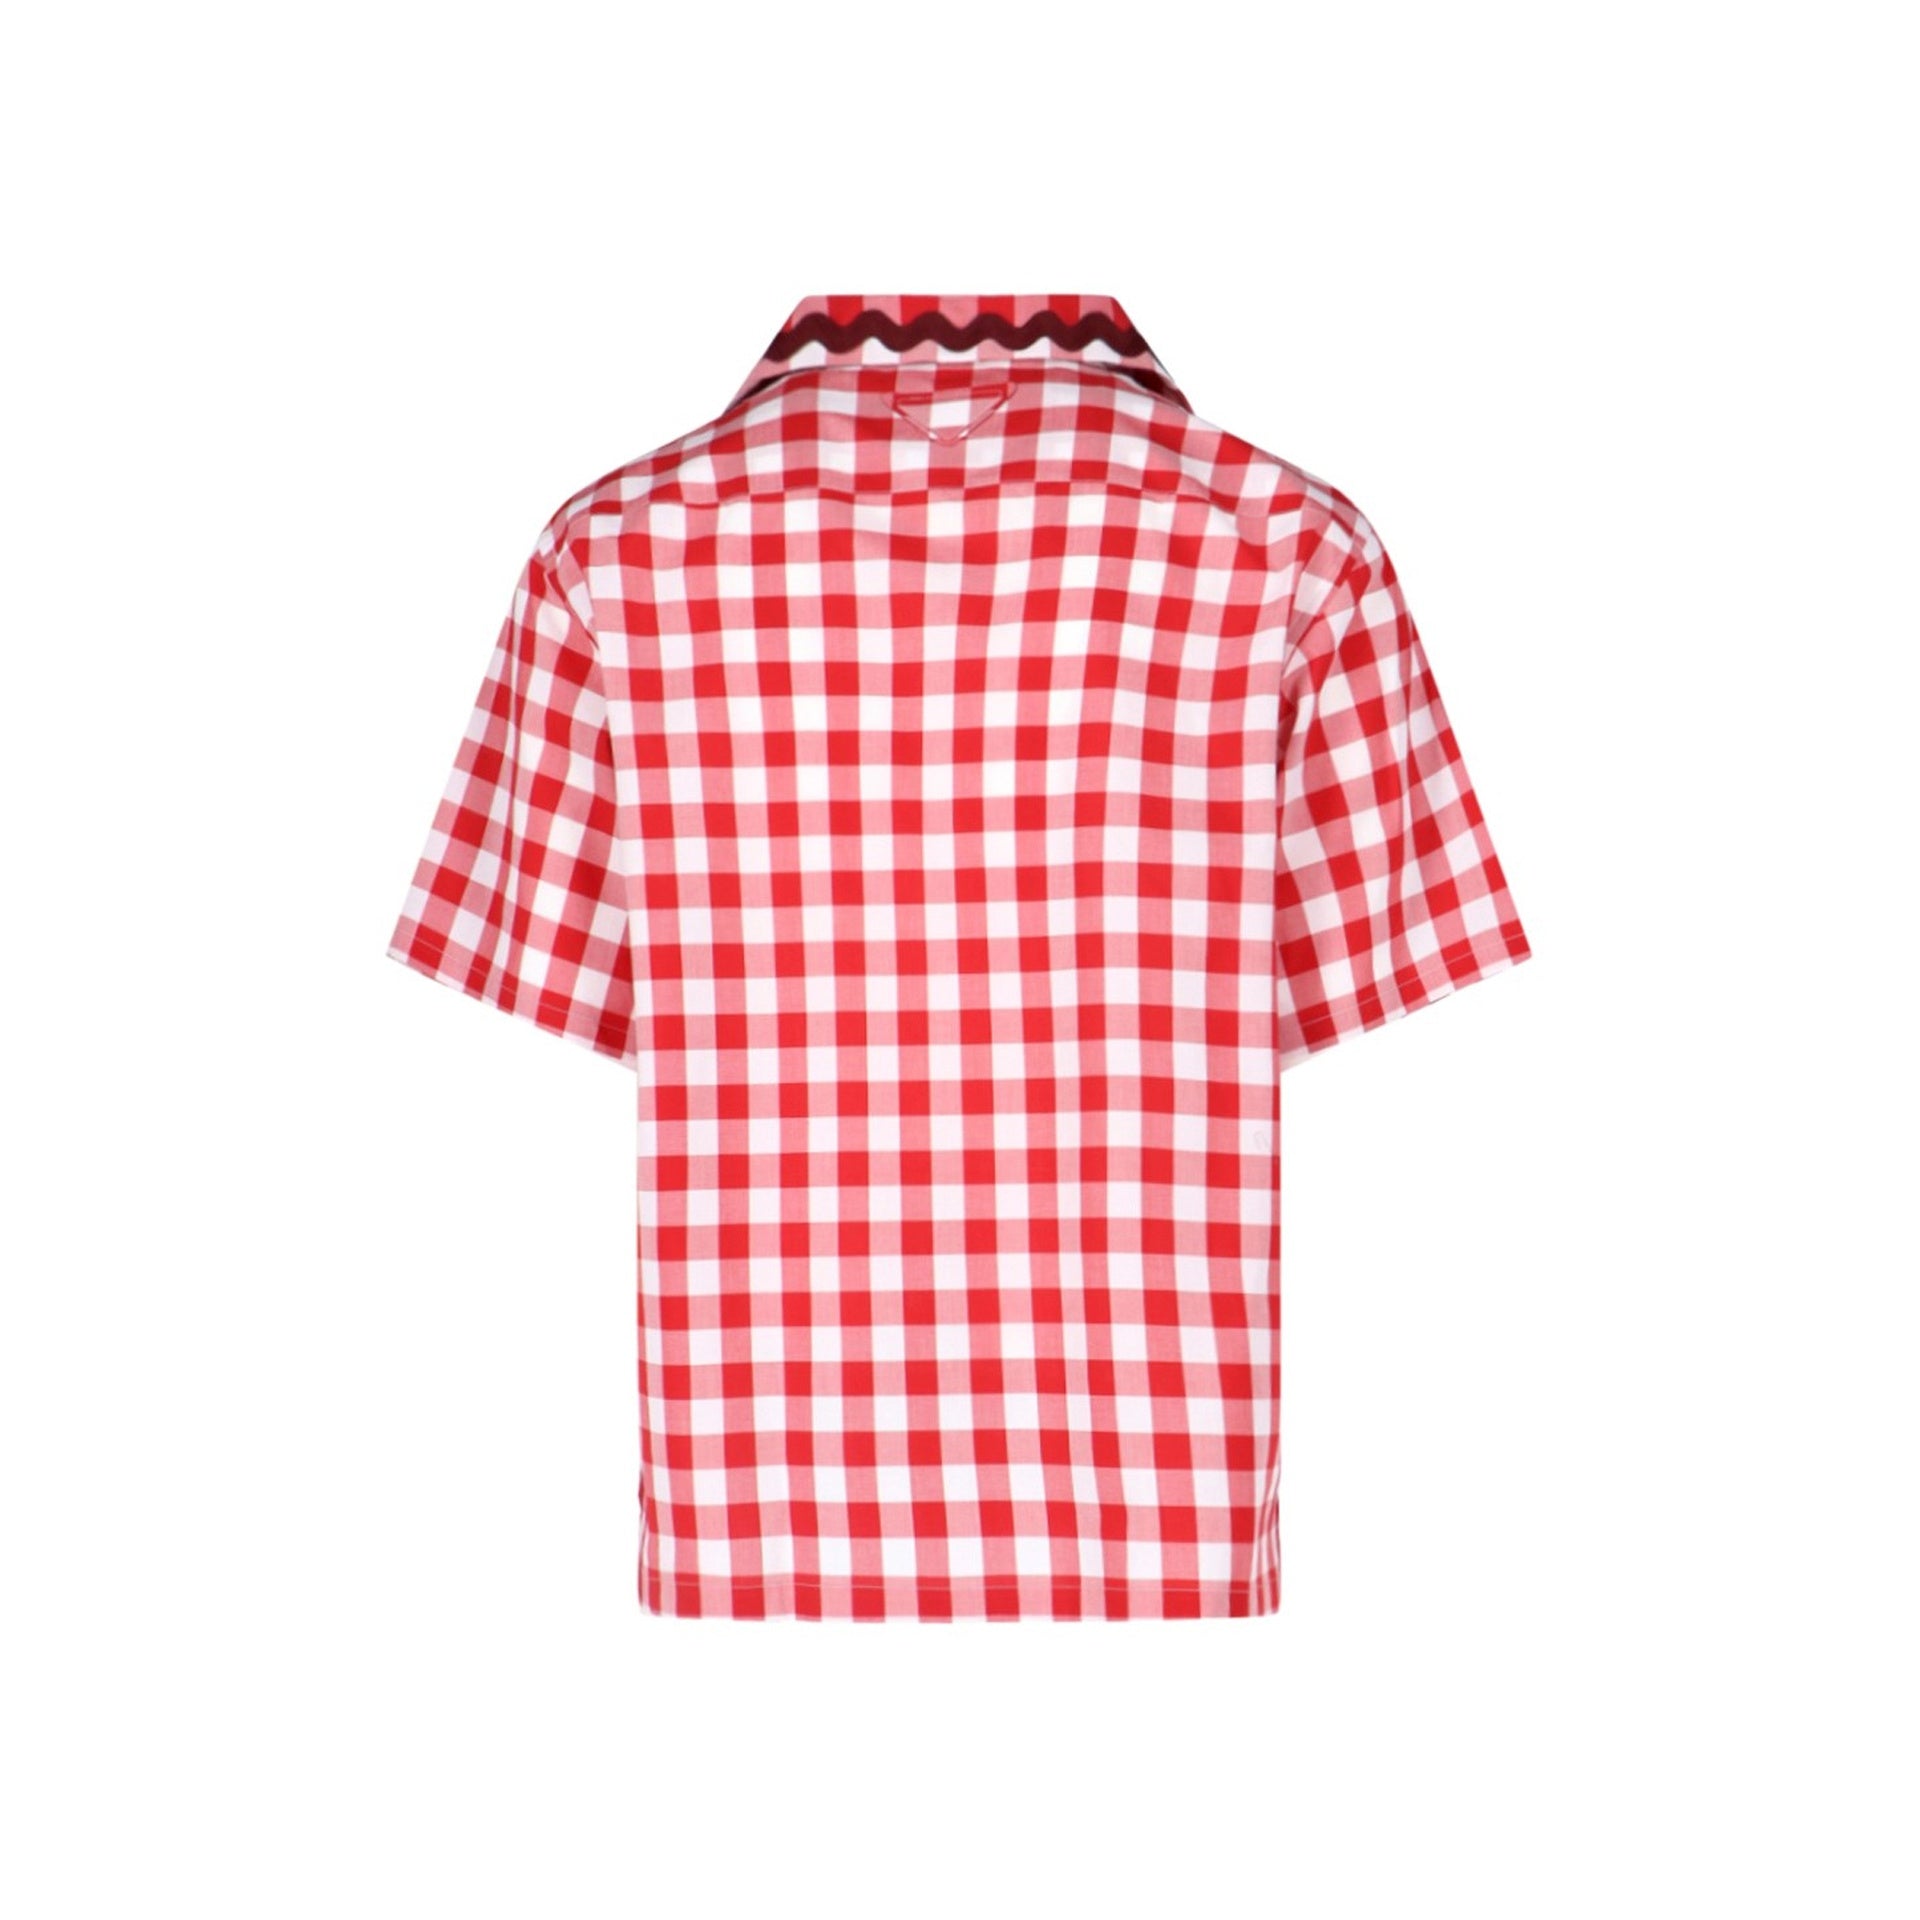 PRADA-Outlet-Sale-Prada Checked Shirt-MEN CLOTHING-ARCHIVIST